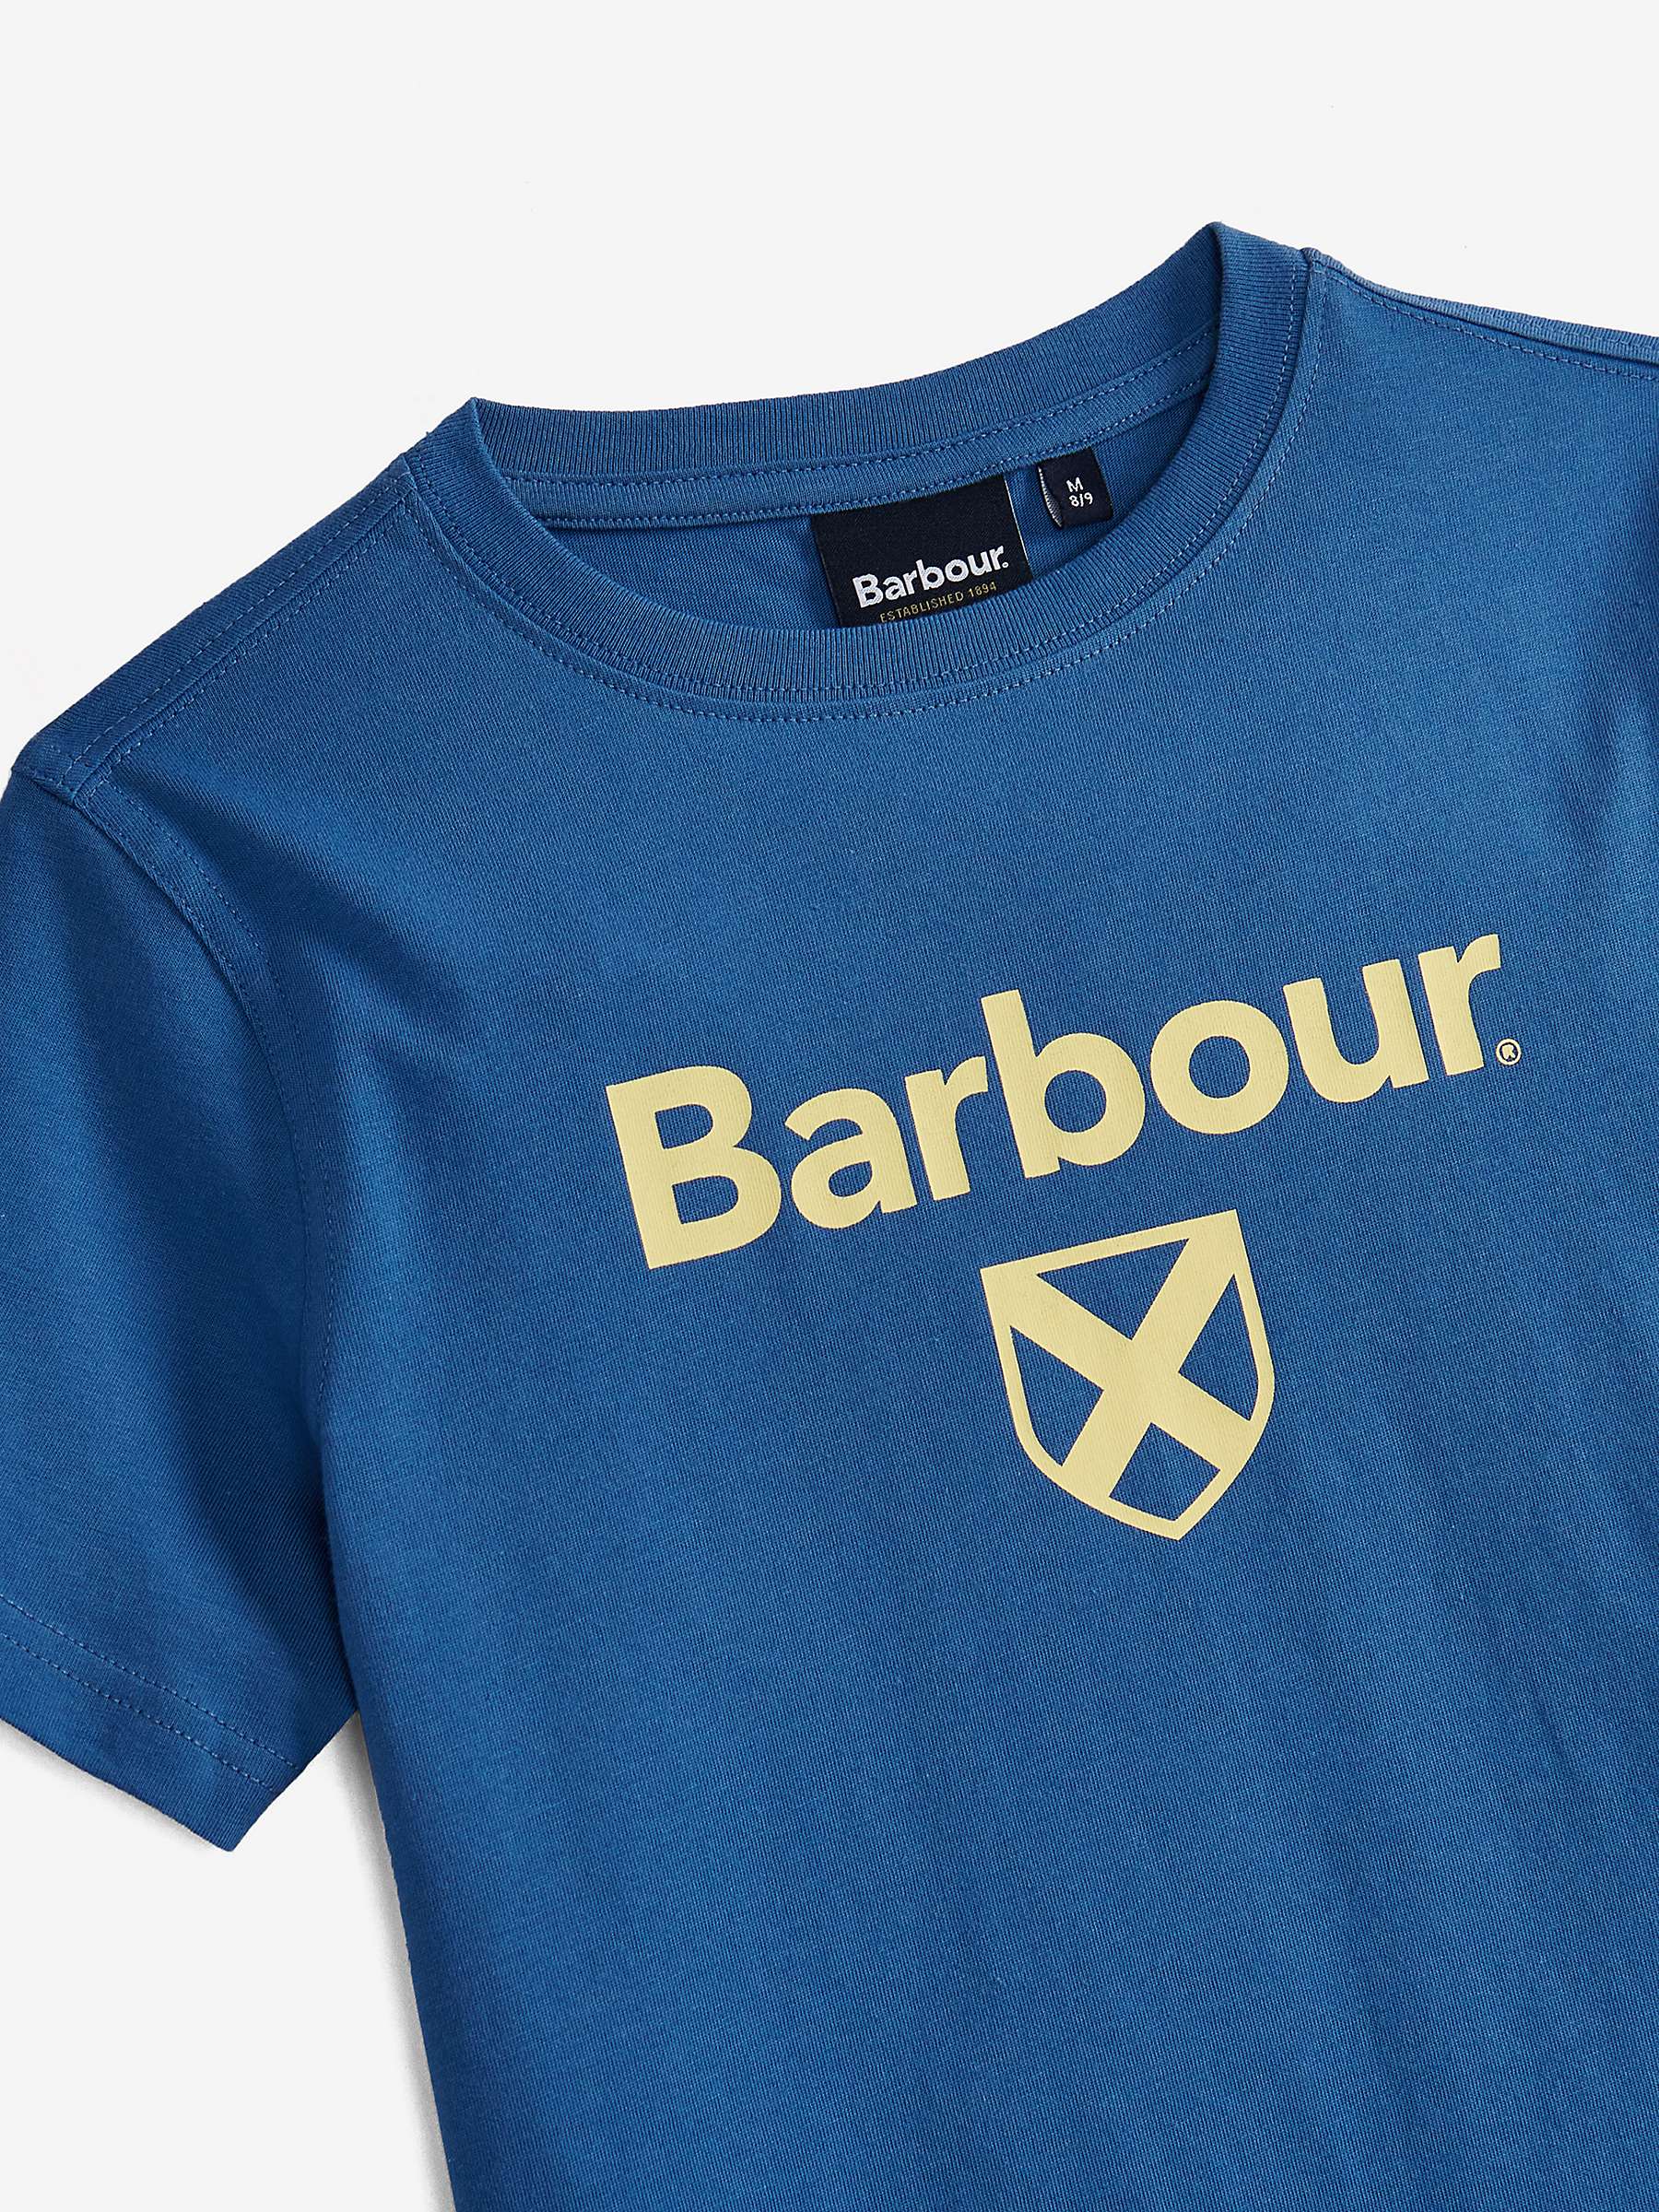 Buy Barbour Kids' Shield T-Shirt, Blue Online at johnlewis.com